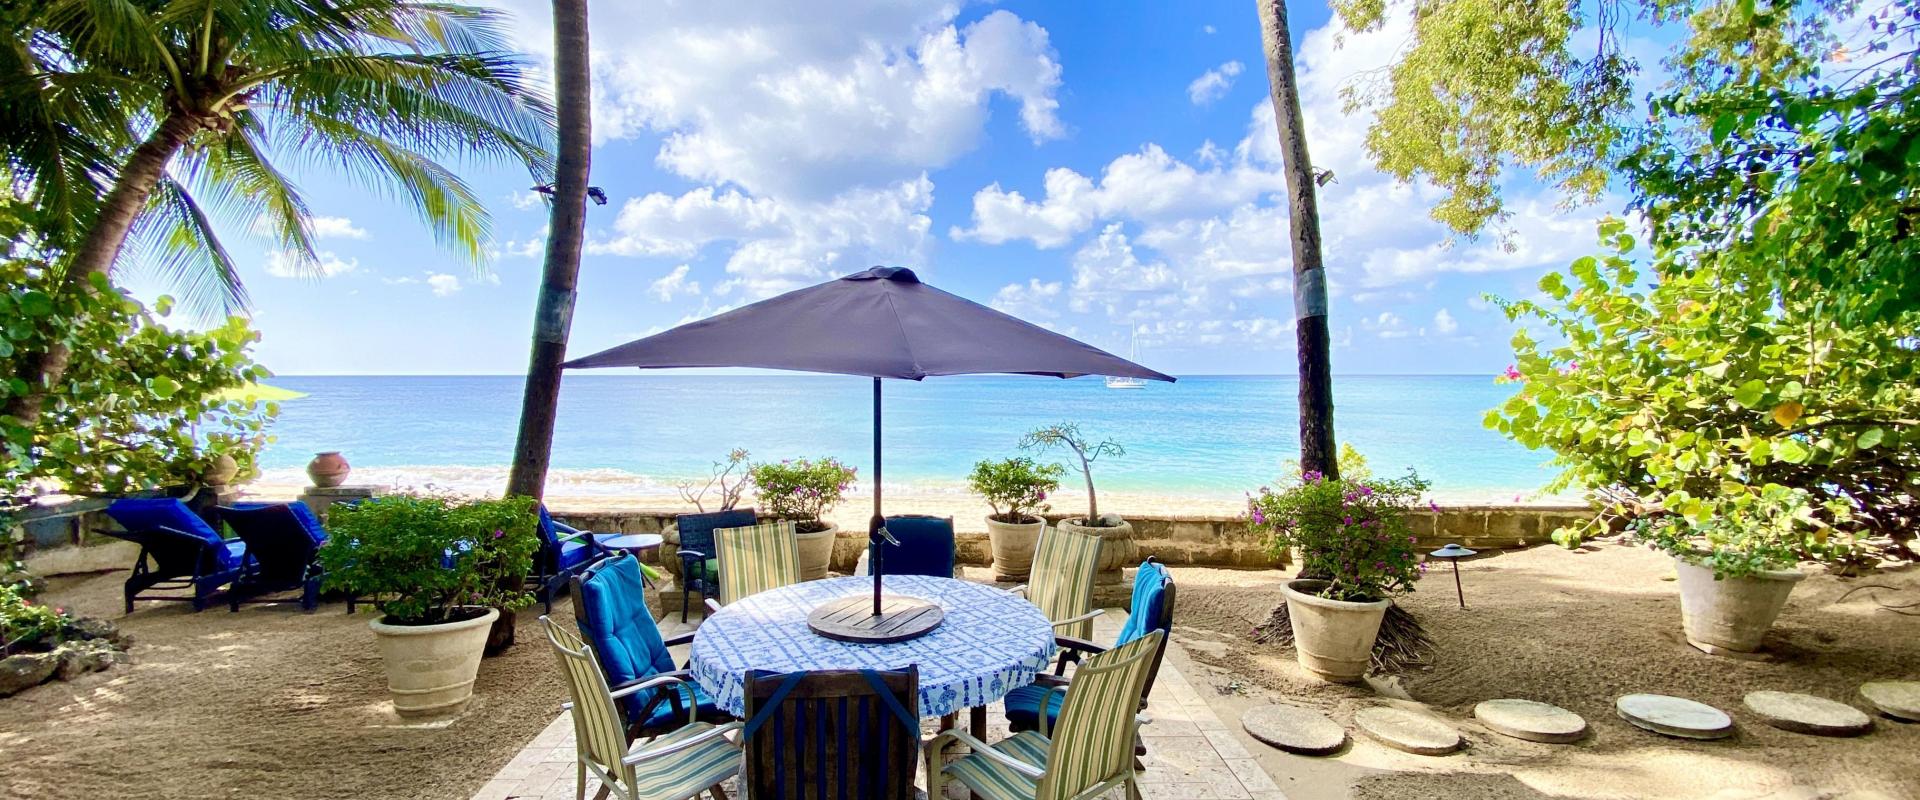 Beachfront Barbados Villa Rental Seascape Dining Table By Ocean